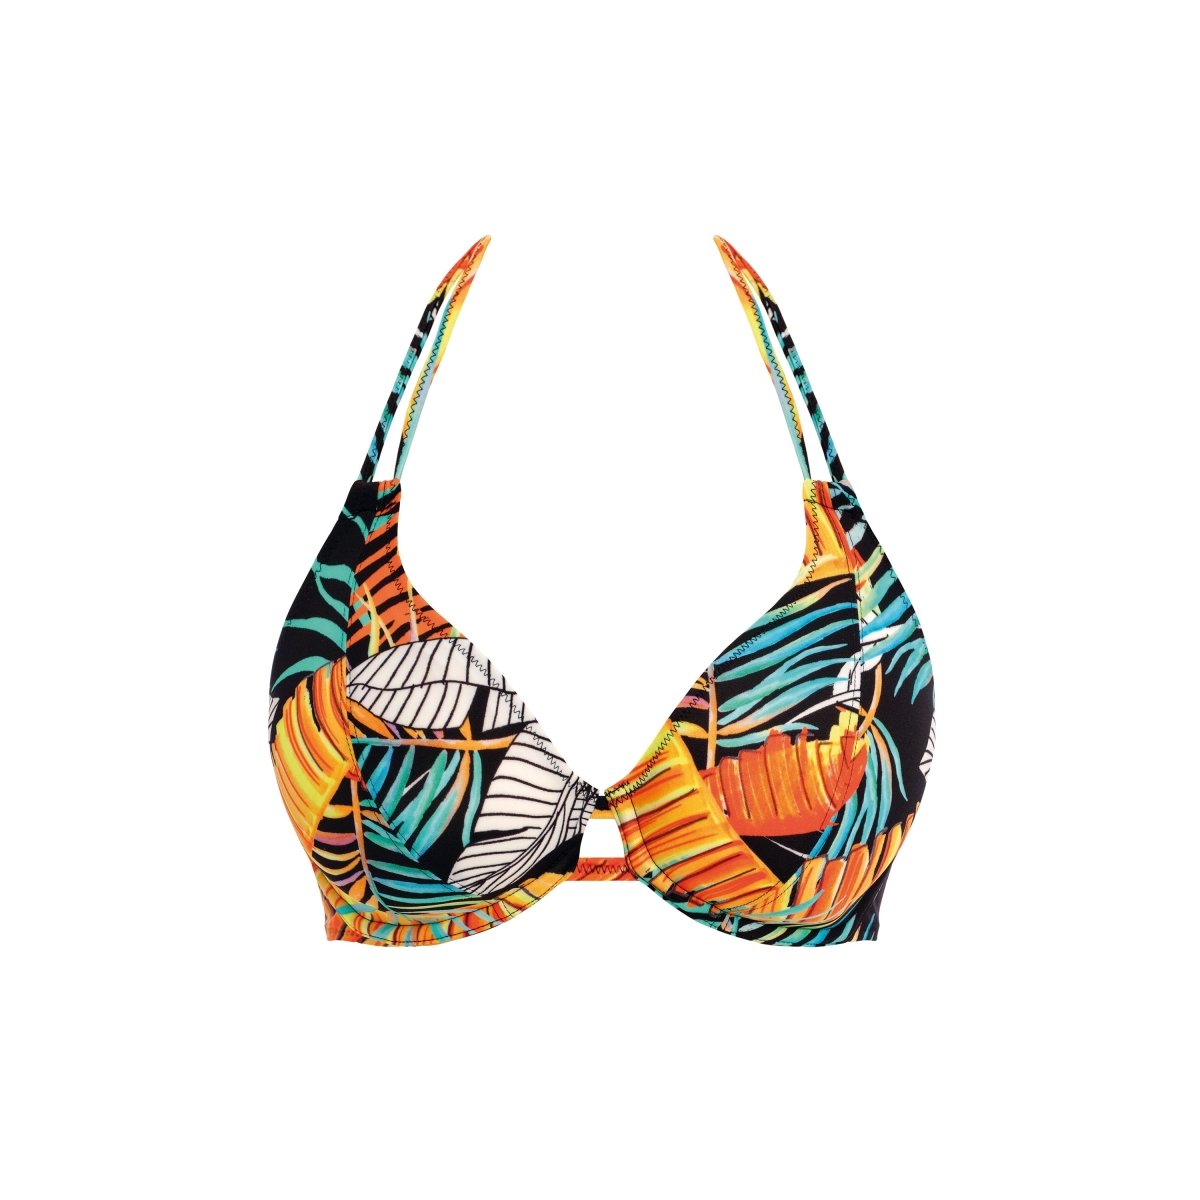 Komodo Bay Underwire Halter Bikini Top - AS204004 - Aqua – Ashley's  Lingerie & Swimwear